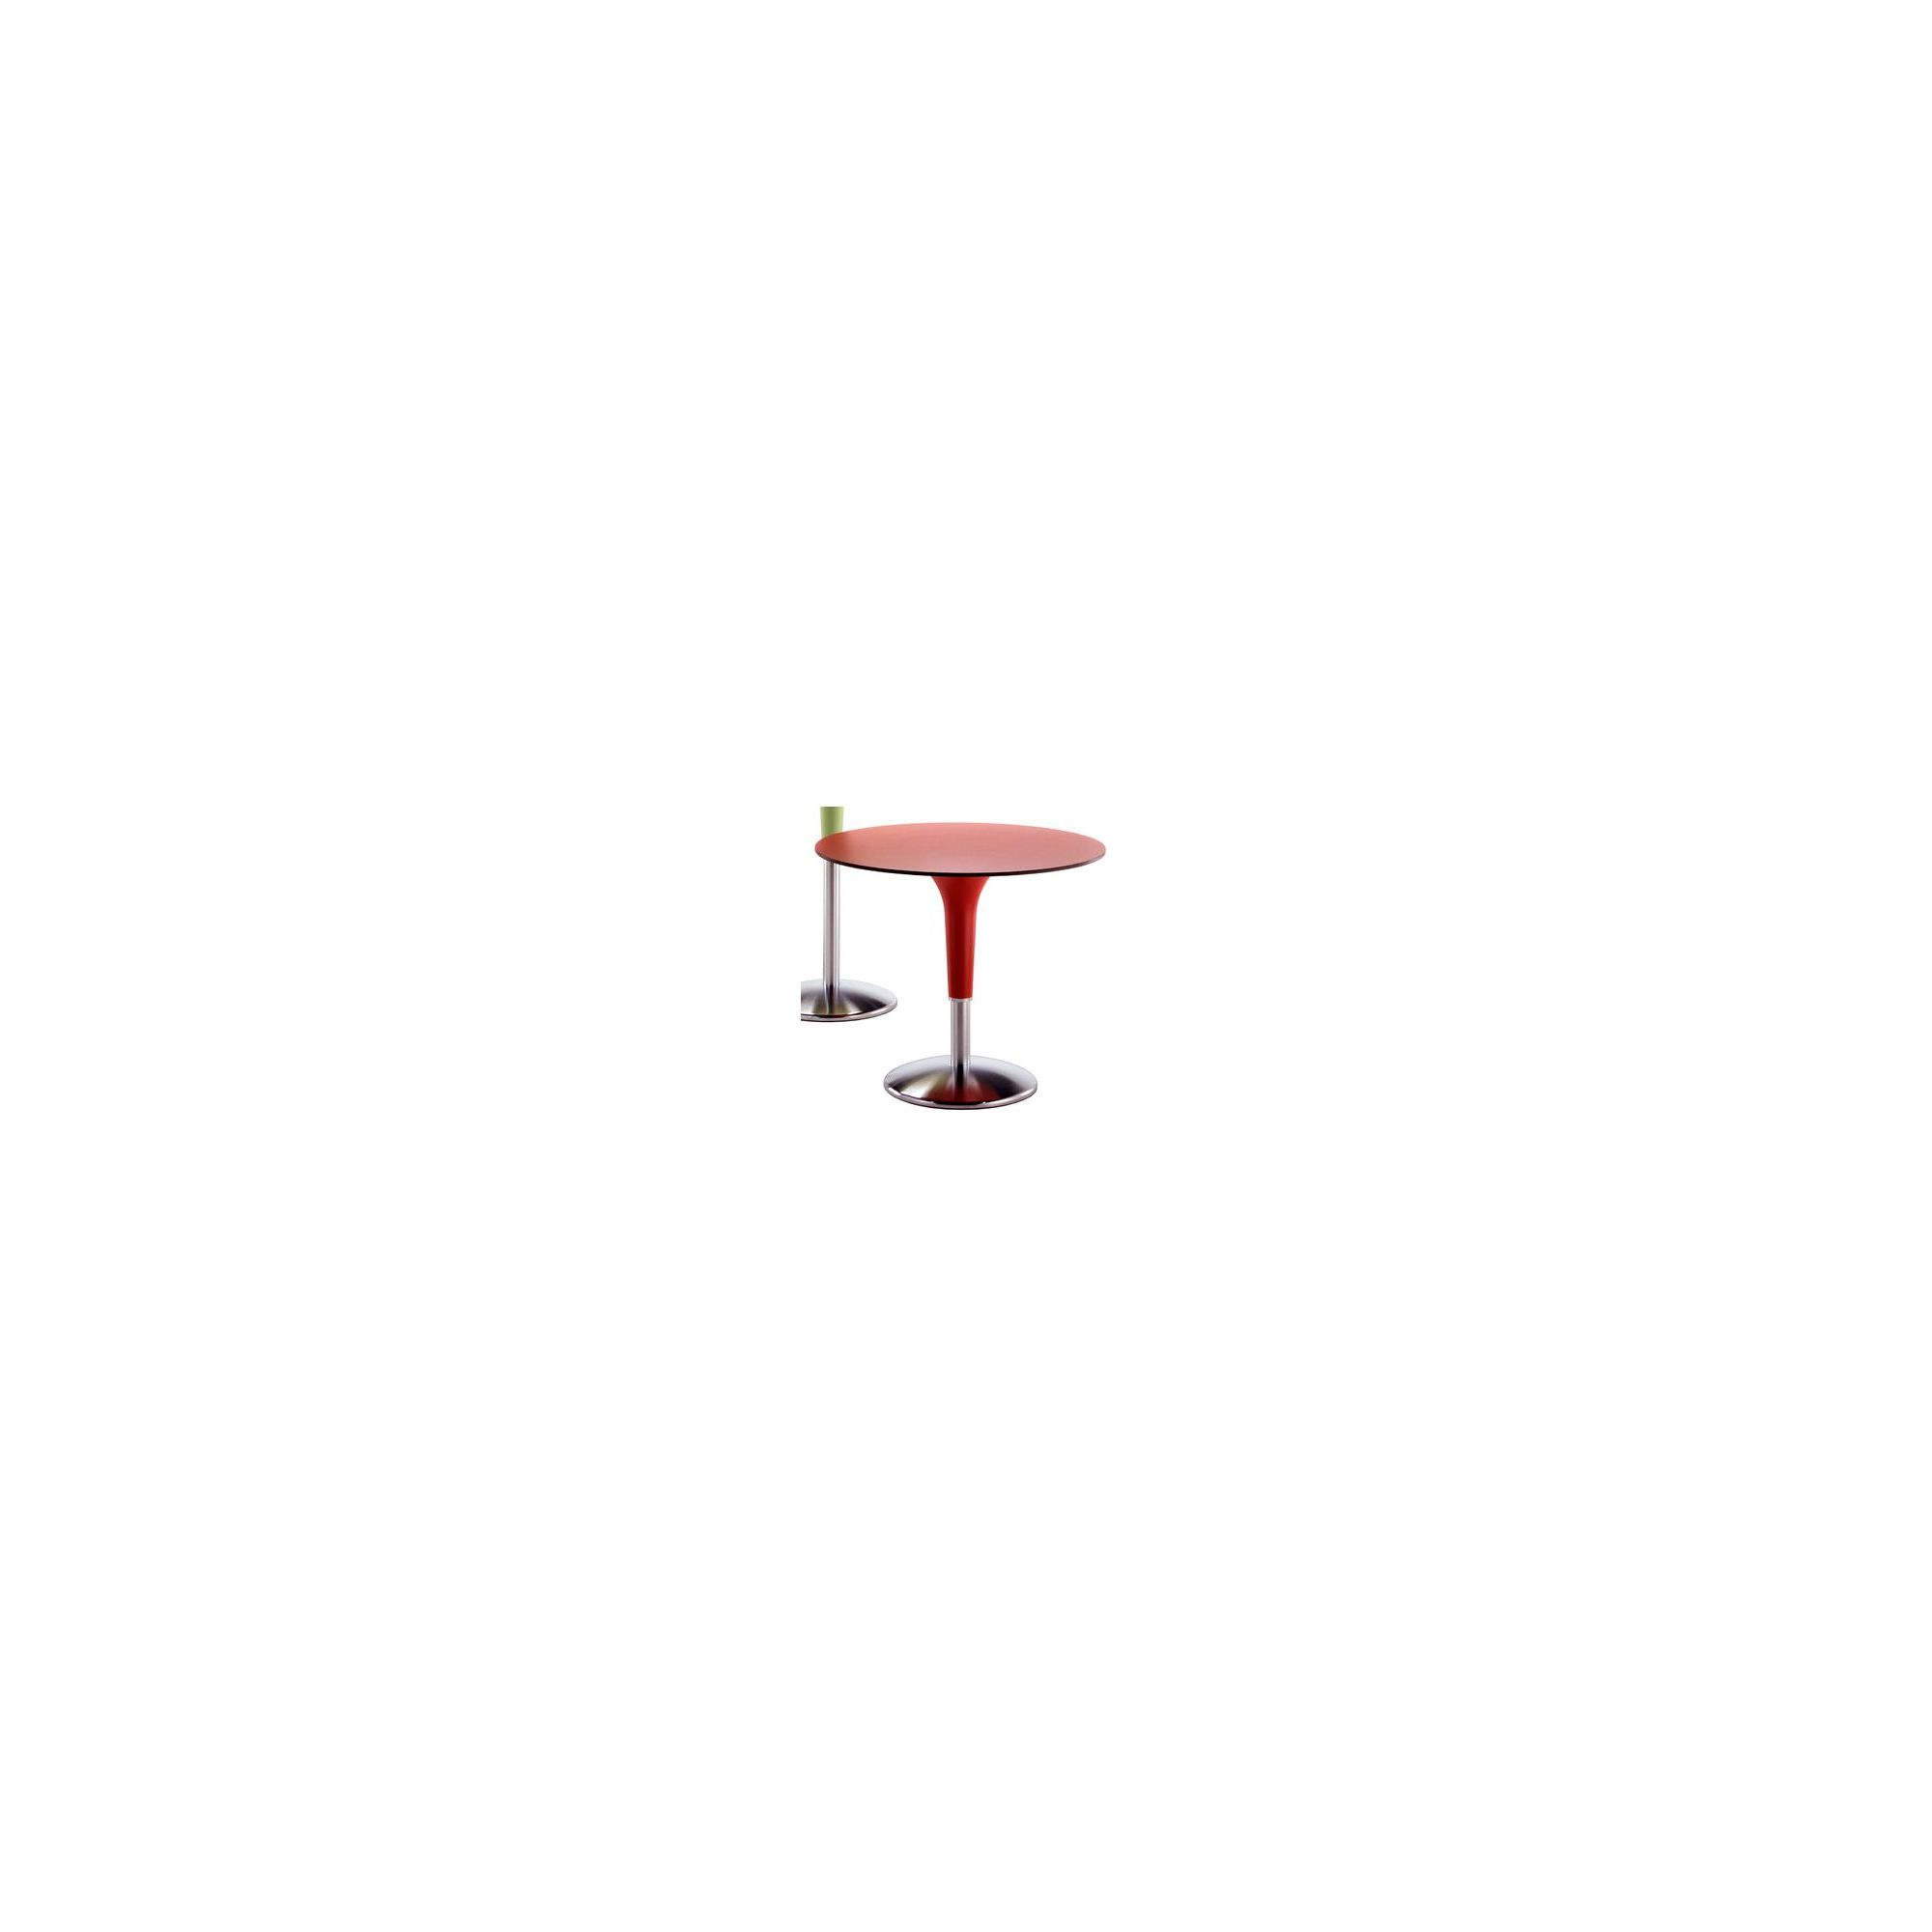 Rexite Zanziplano Round Coffee Table - 60cm x 75cm - Red at Tesco Direct